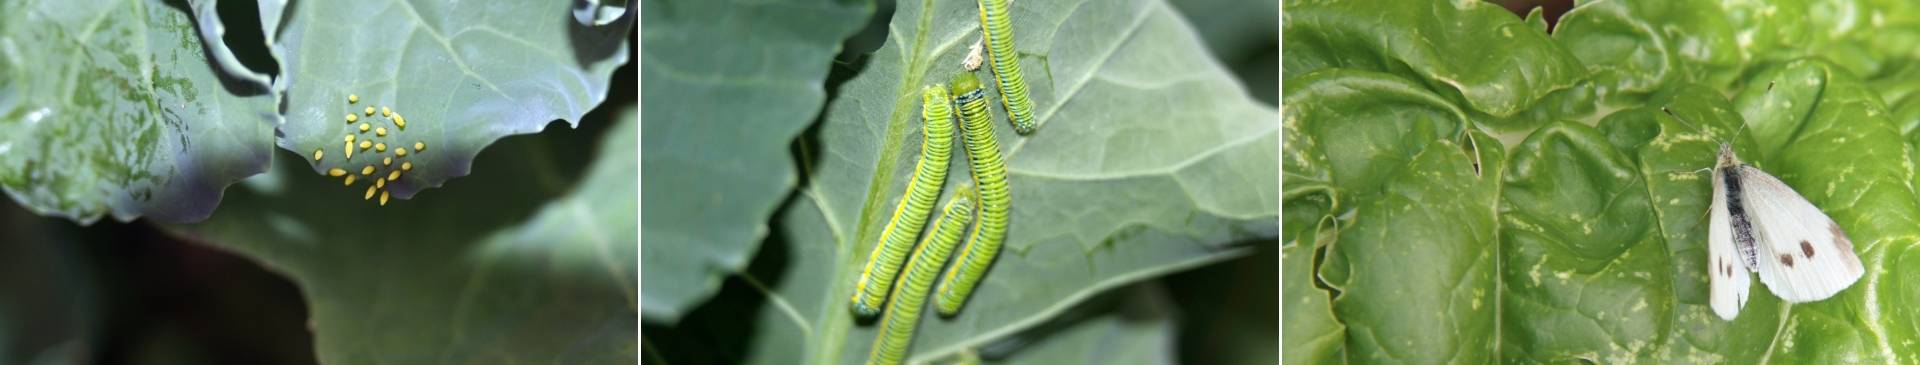 A Veggie Gardener's Guide to Cabbage Moths, Butterflies, and Caterpillars